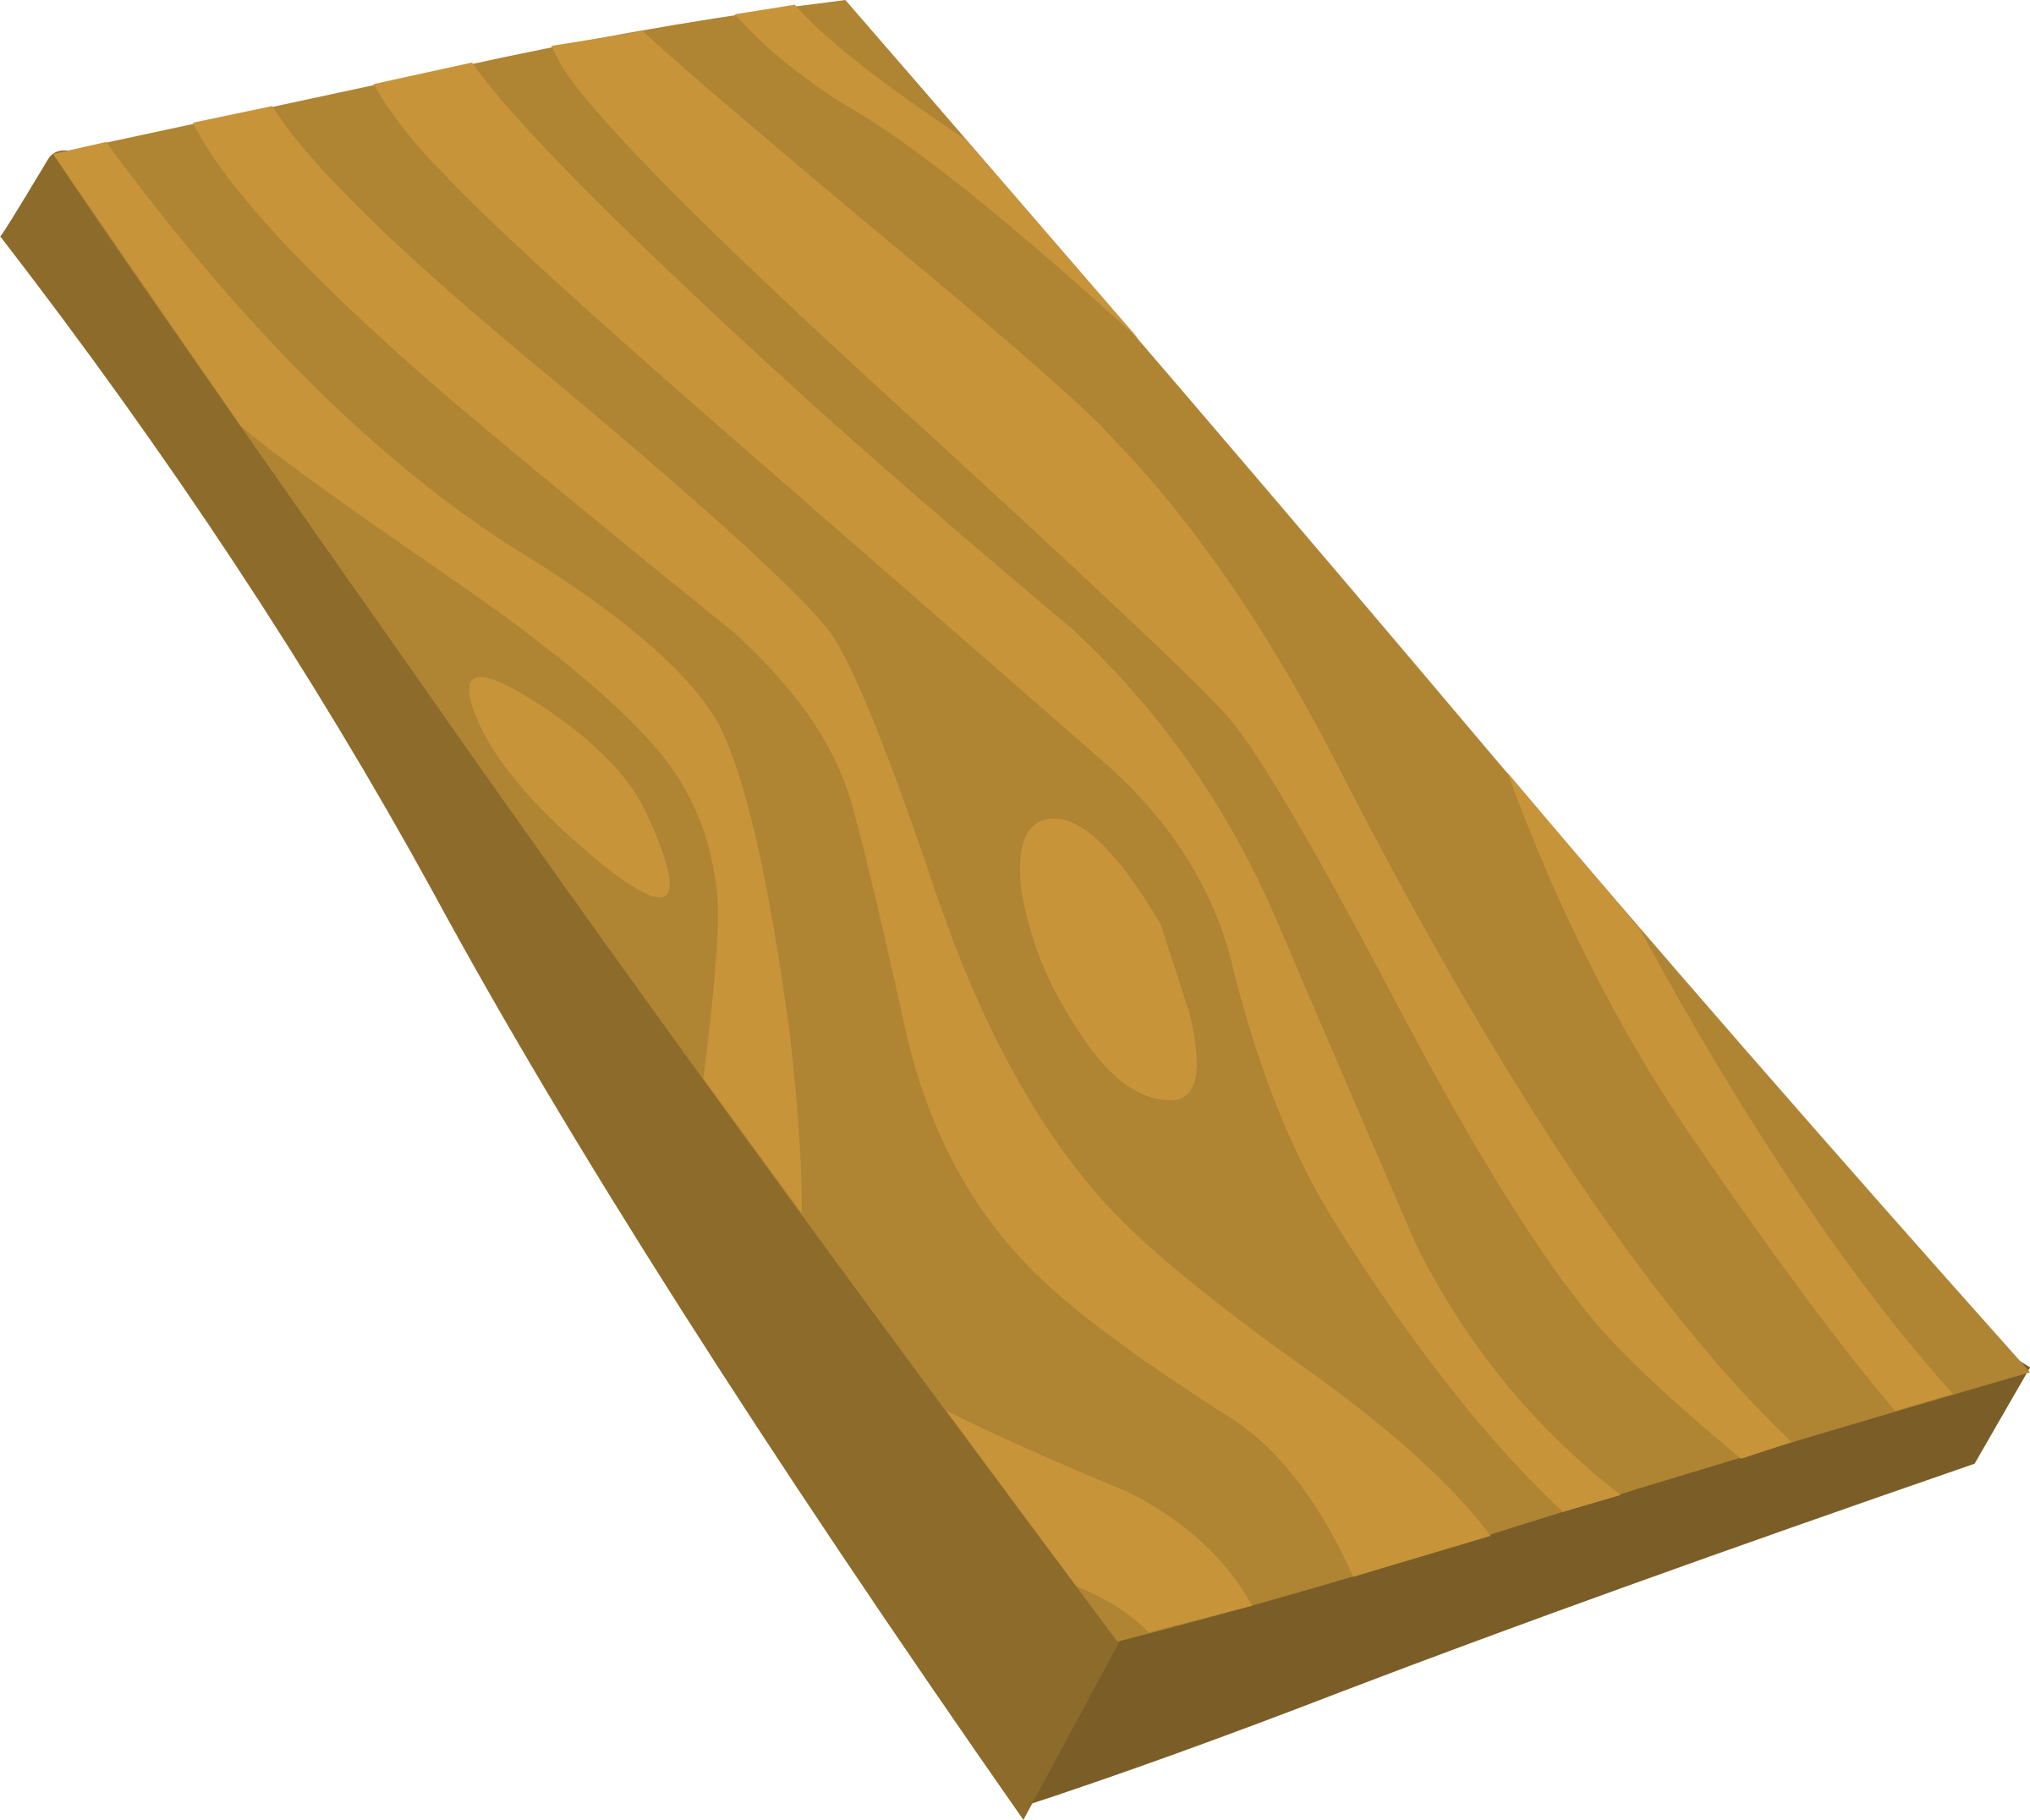 Wood Grain Effect Clipart